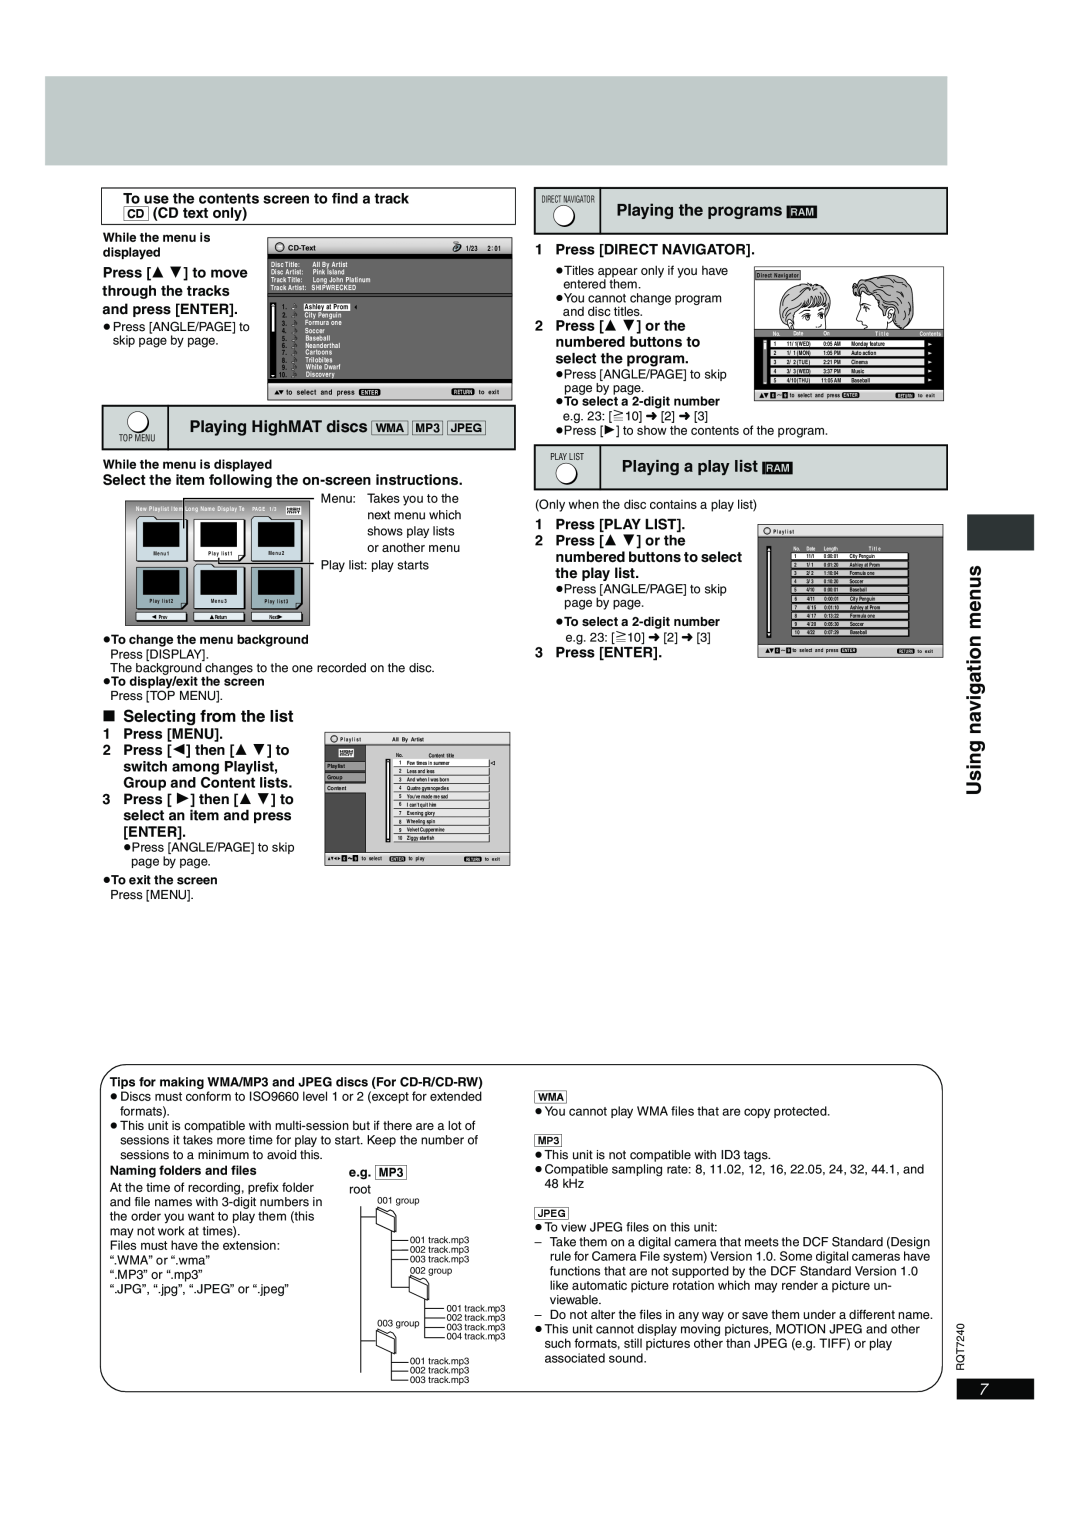 Panasonic DVD-S24 menus, Using, Playing the programs RAM, Playing HighMAT discs WMA MP3 JPEG, Playing a play list RAM 